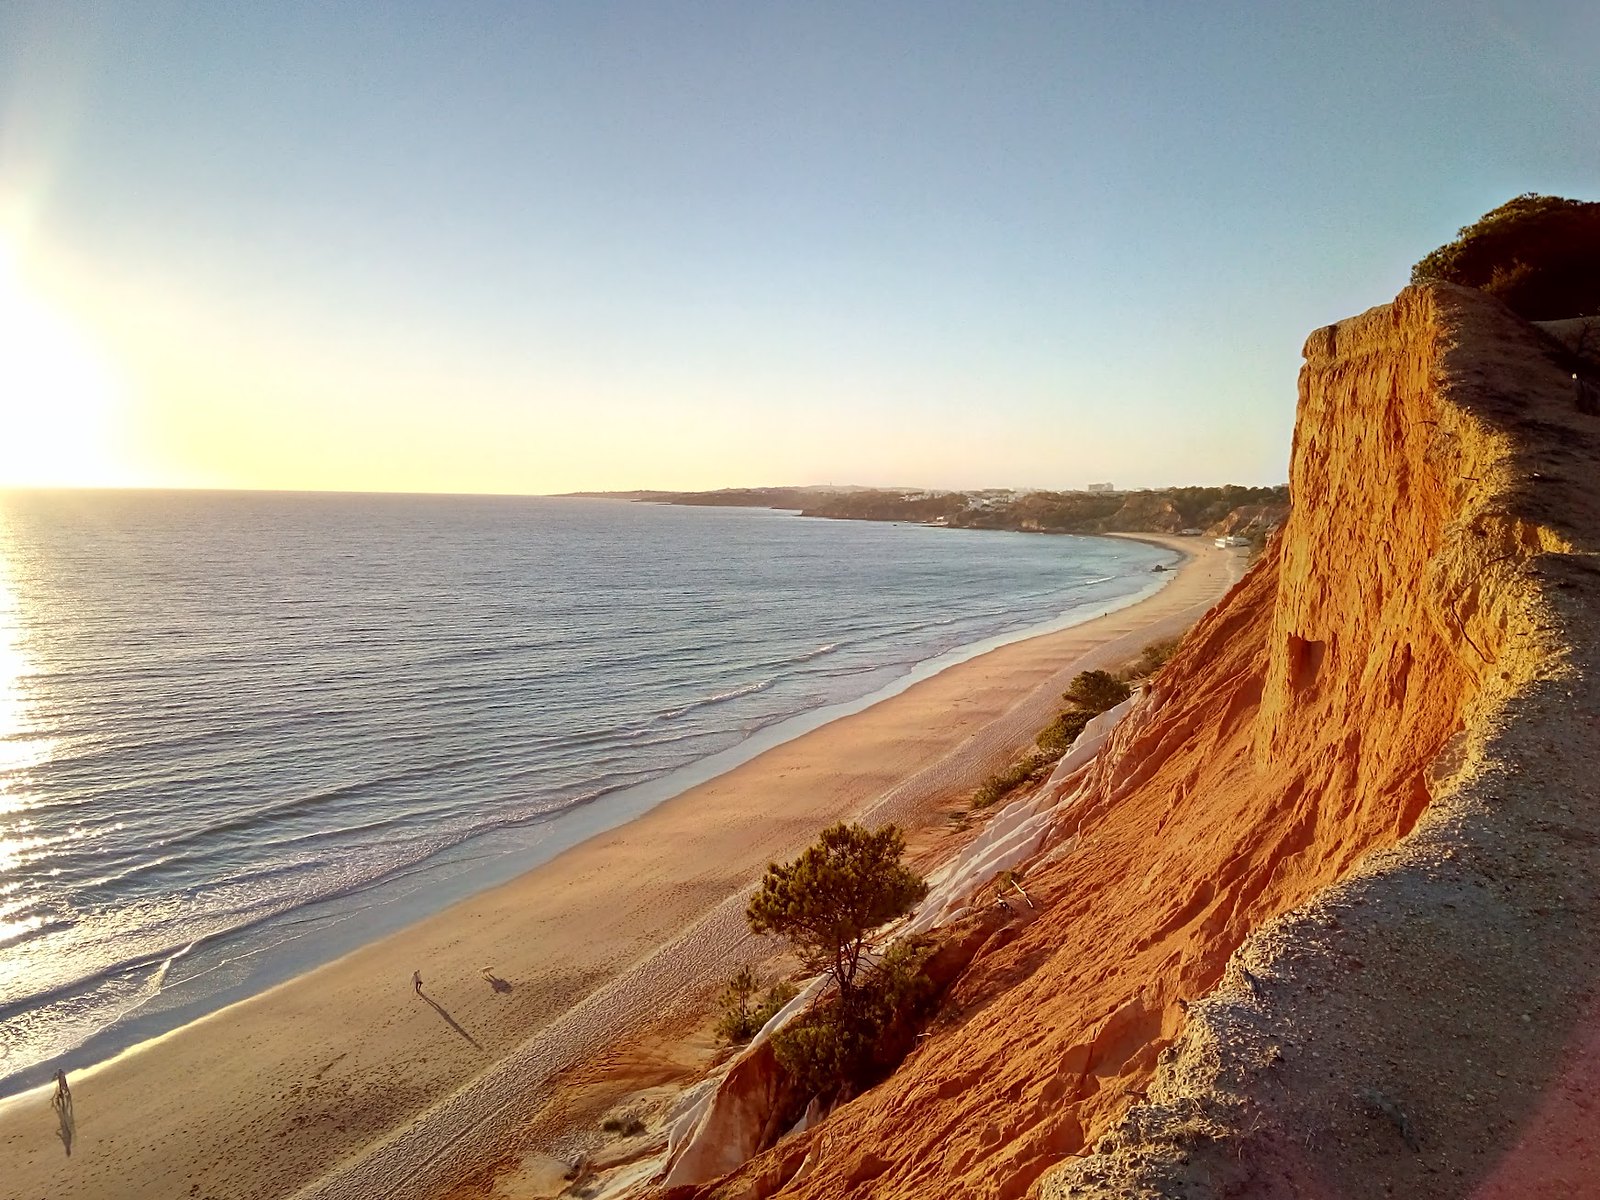 Praia da Falésia, Algarve — (c) 2021